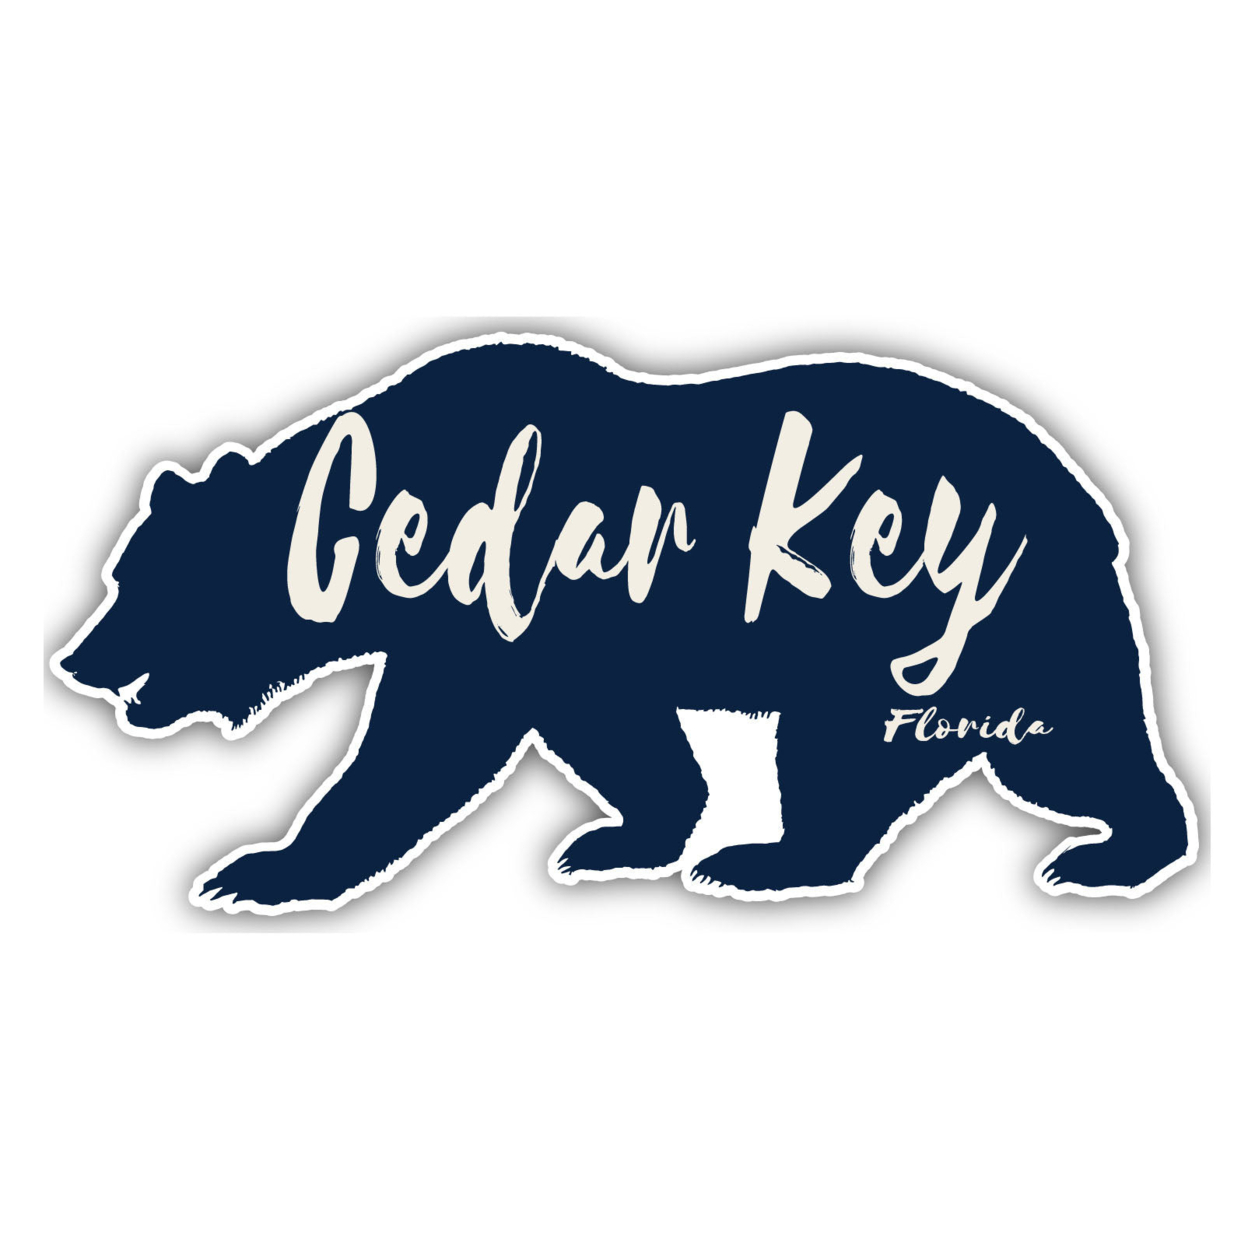 Cedar Key Florida Souvenir Decorative Stickers (Choose Theme And Size) - Single Unit, 4-Inch, Tent